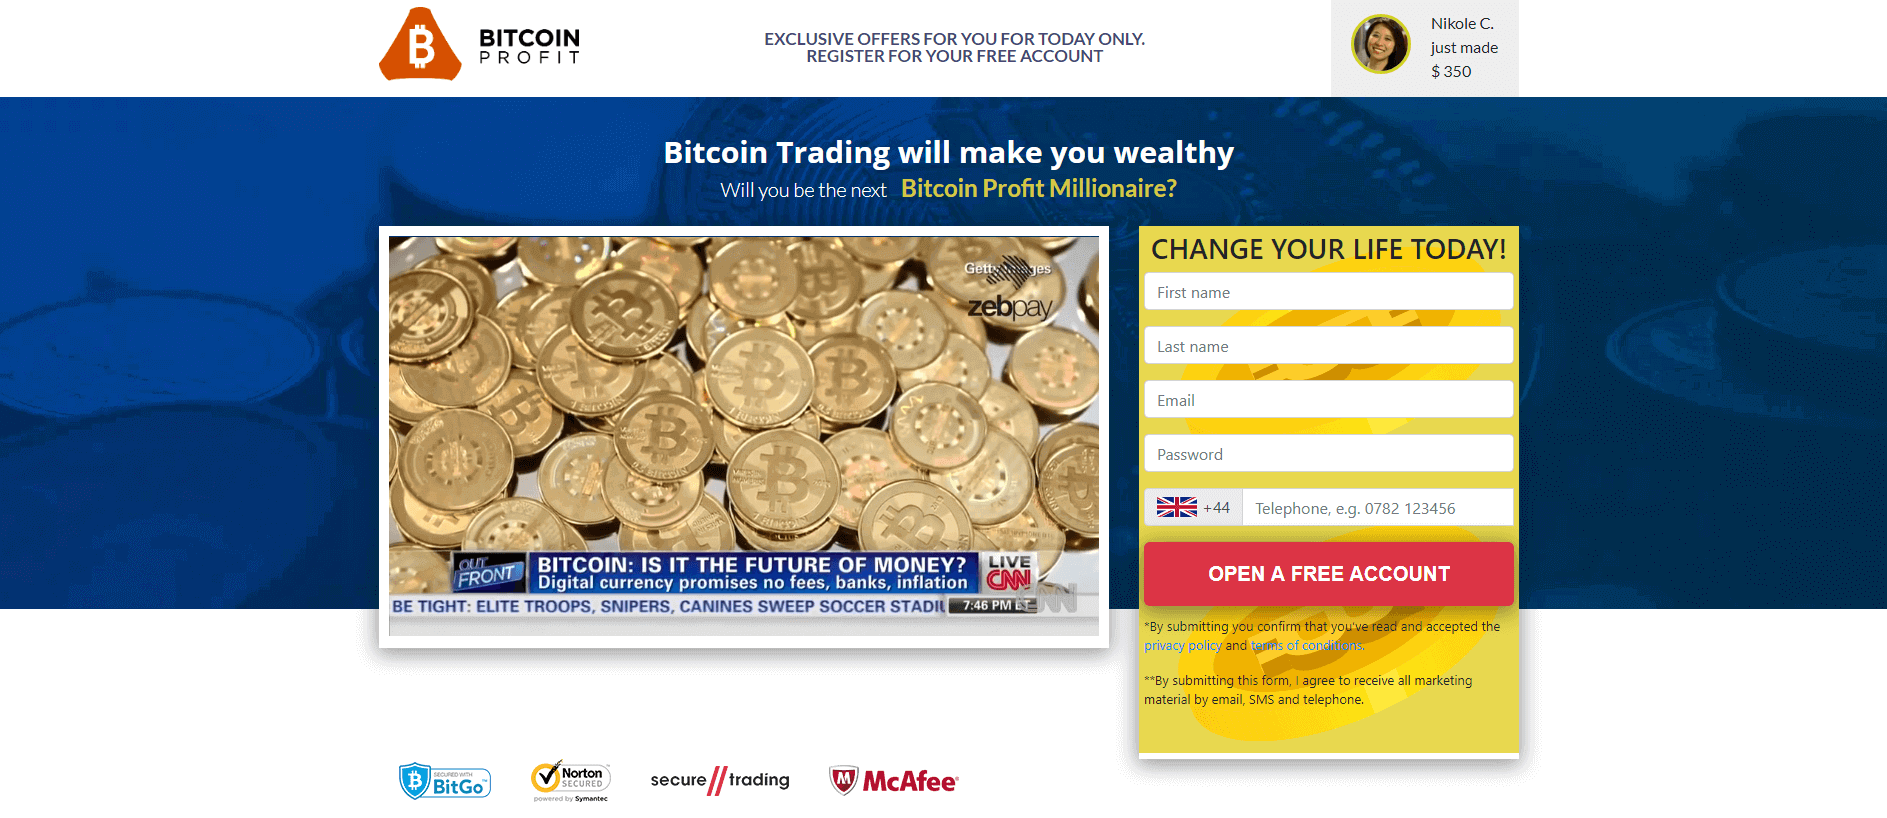 bitcoin profit this morning